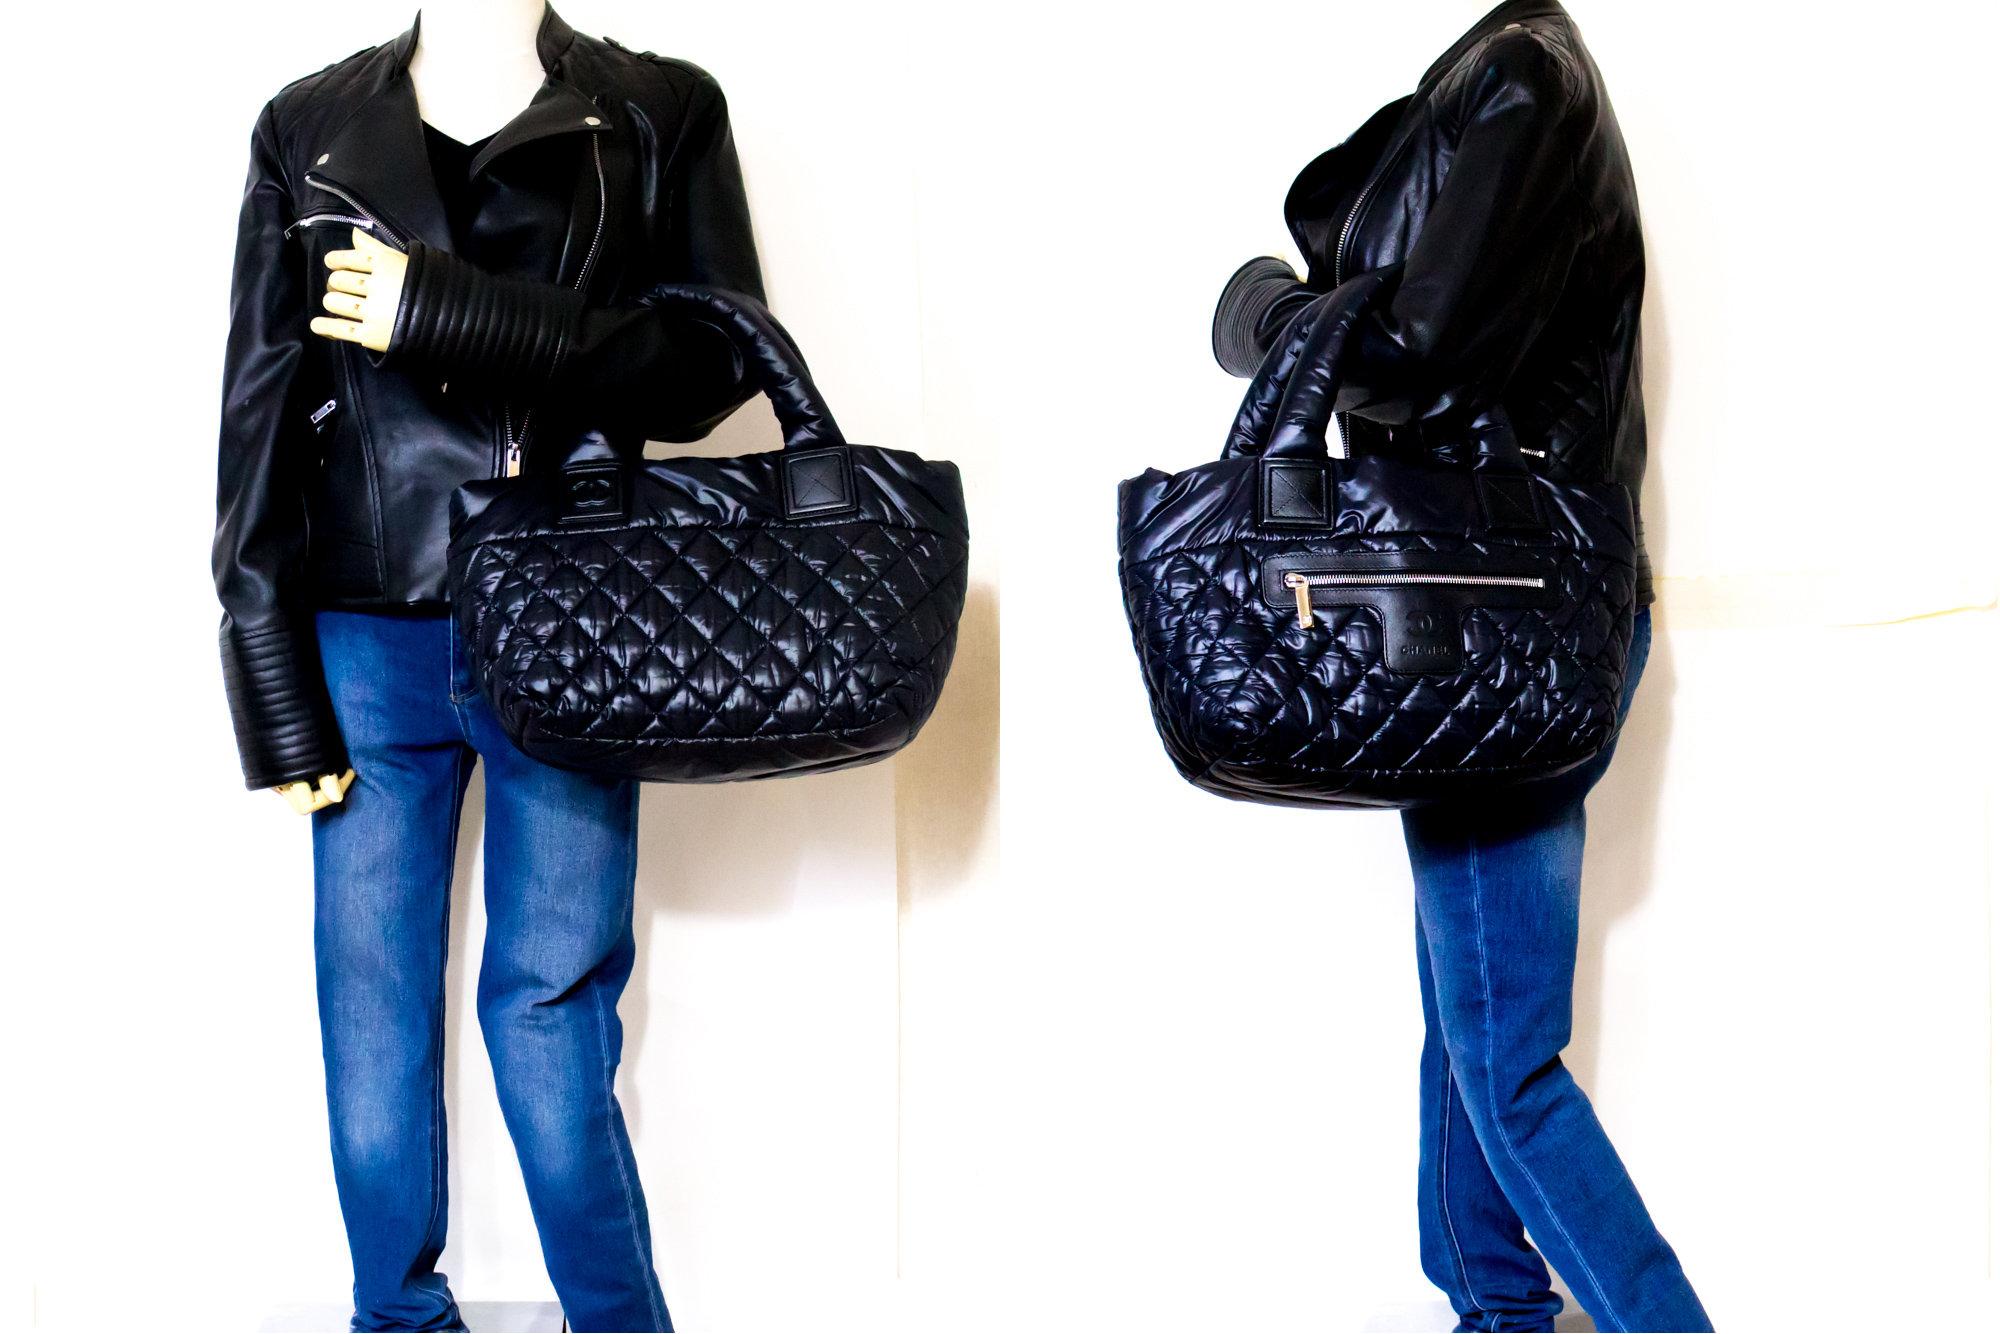 CHANEL Coco Cocoon PM Nylon Tote Bag Handbag Leather Black 4